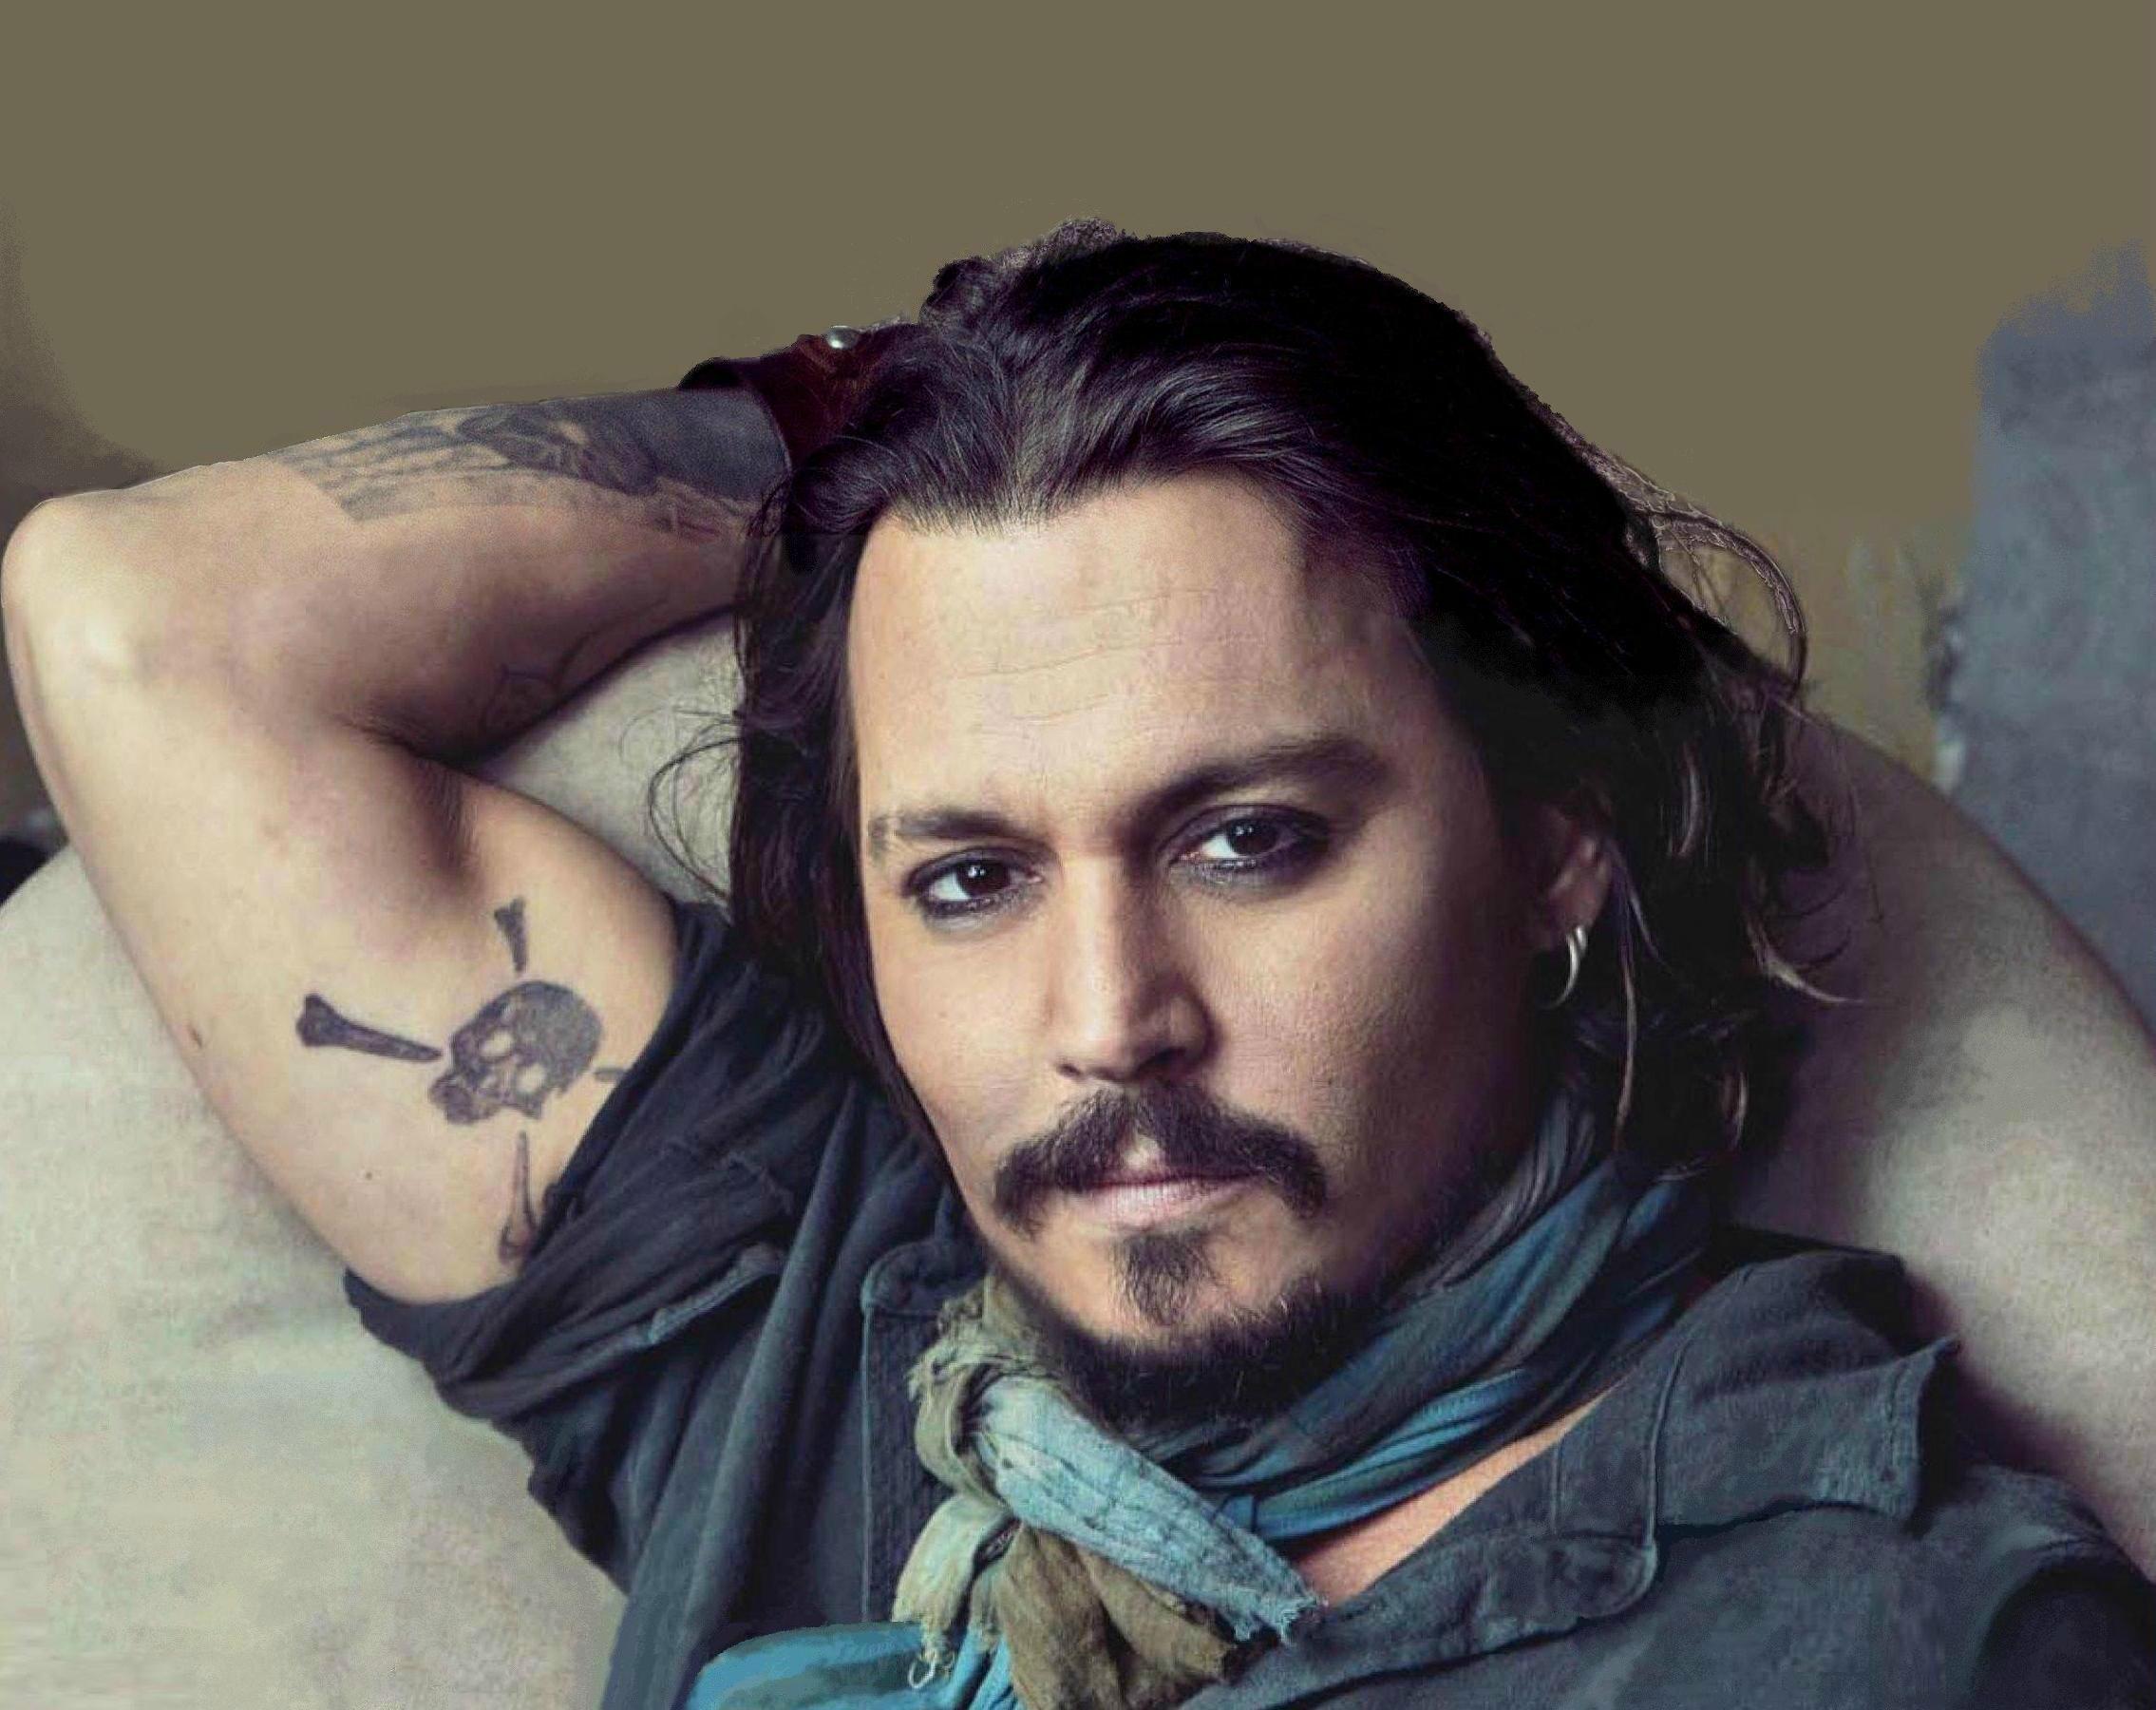 Johnny Depp Wallpaper 24 Background. Wallruru